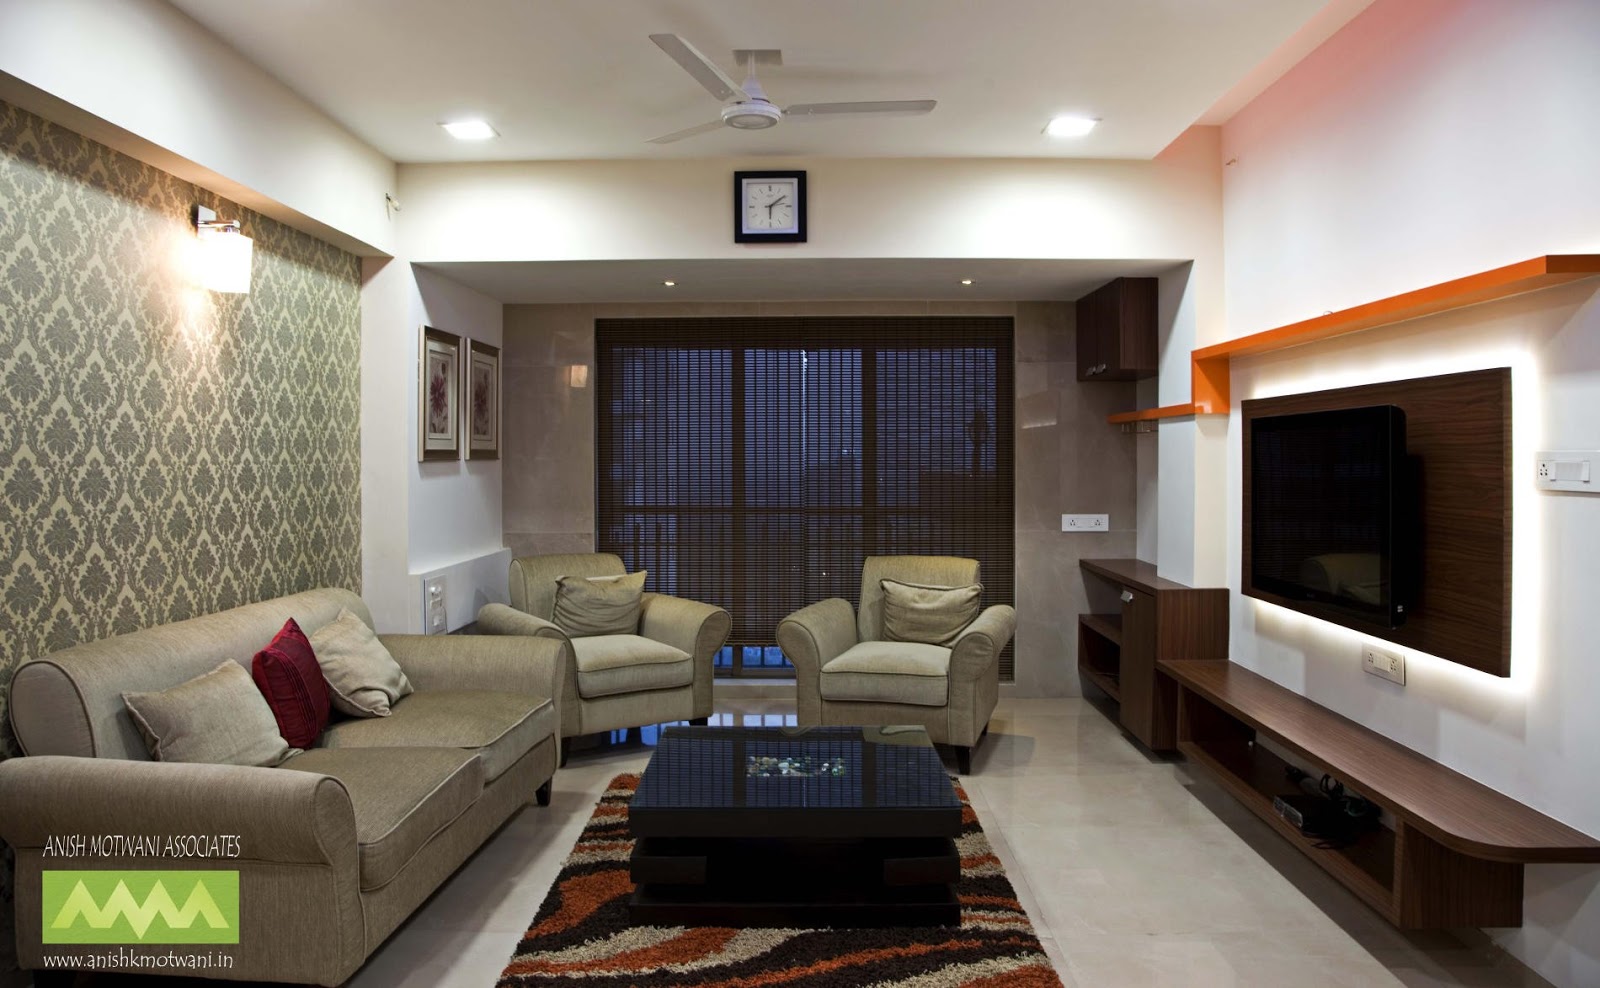 Sofa for Living Room India Fresh 84 Fresh Interior Design Ideas  - Sofa Set Design For Living Room In India